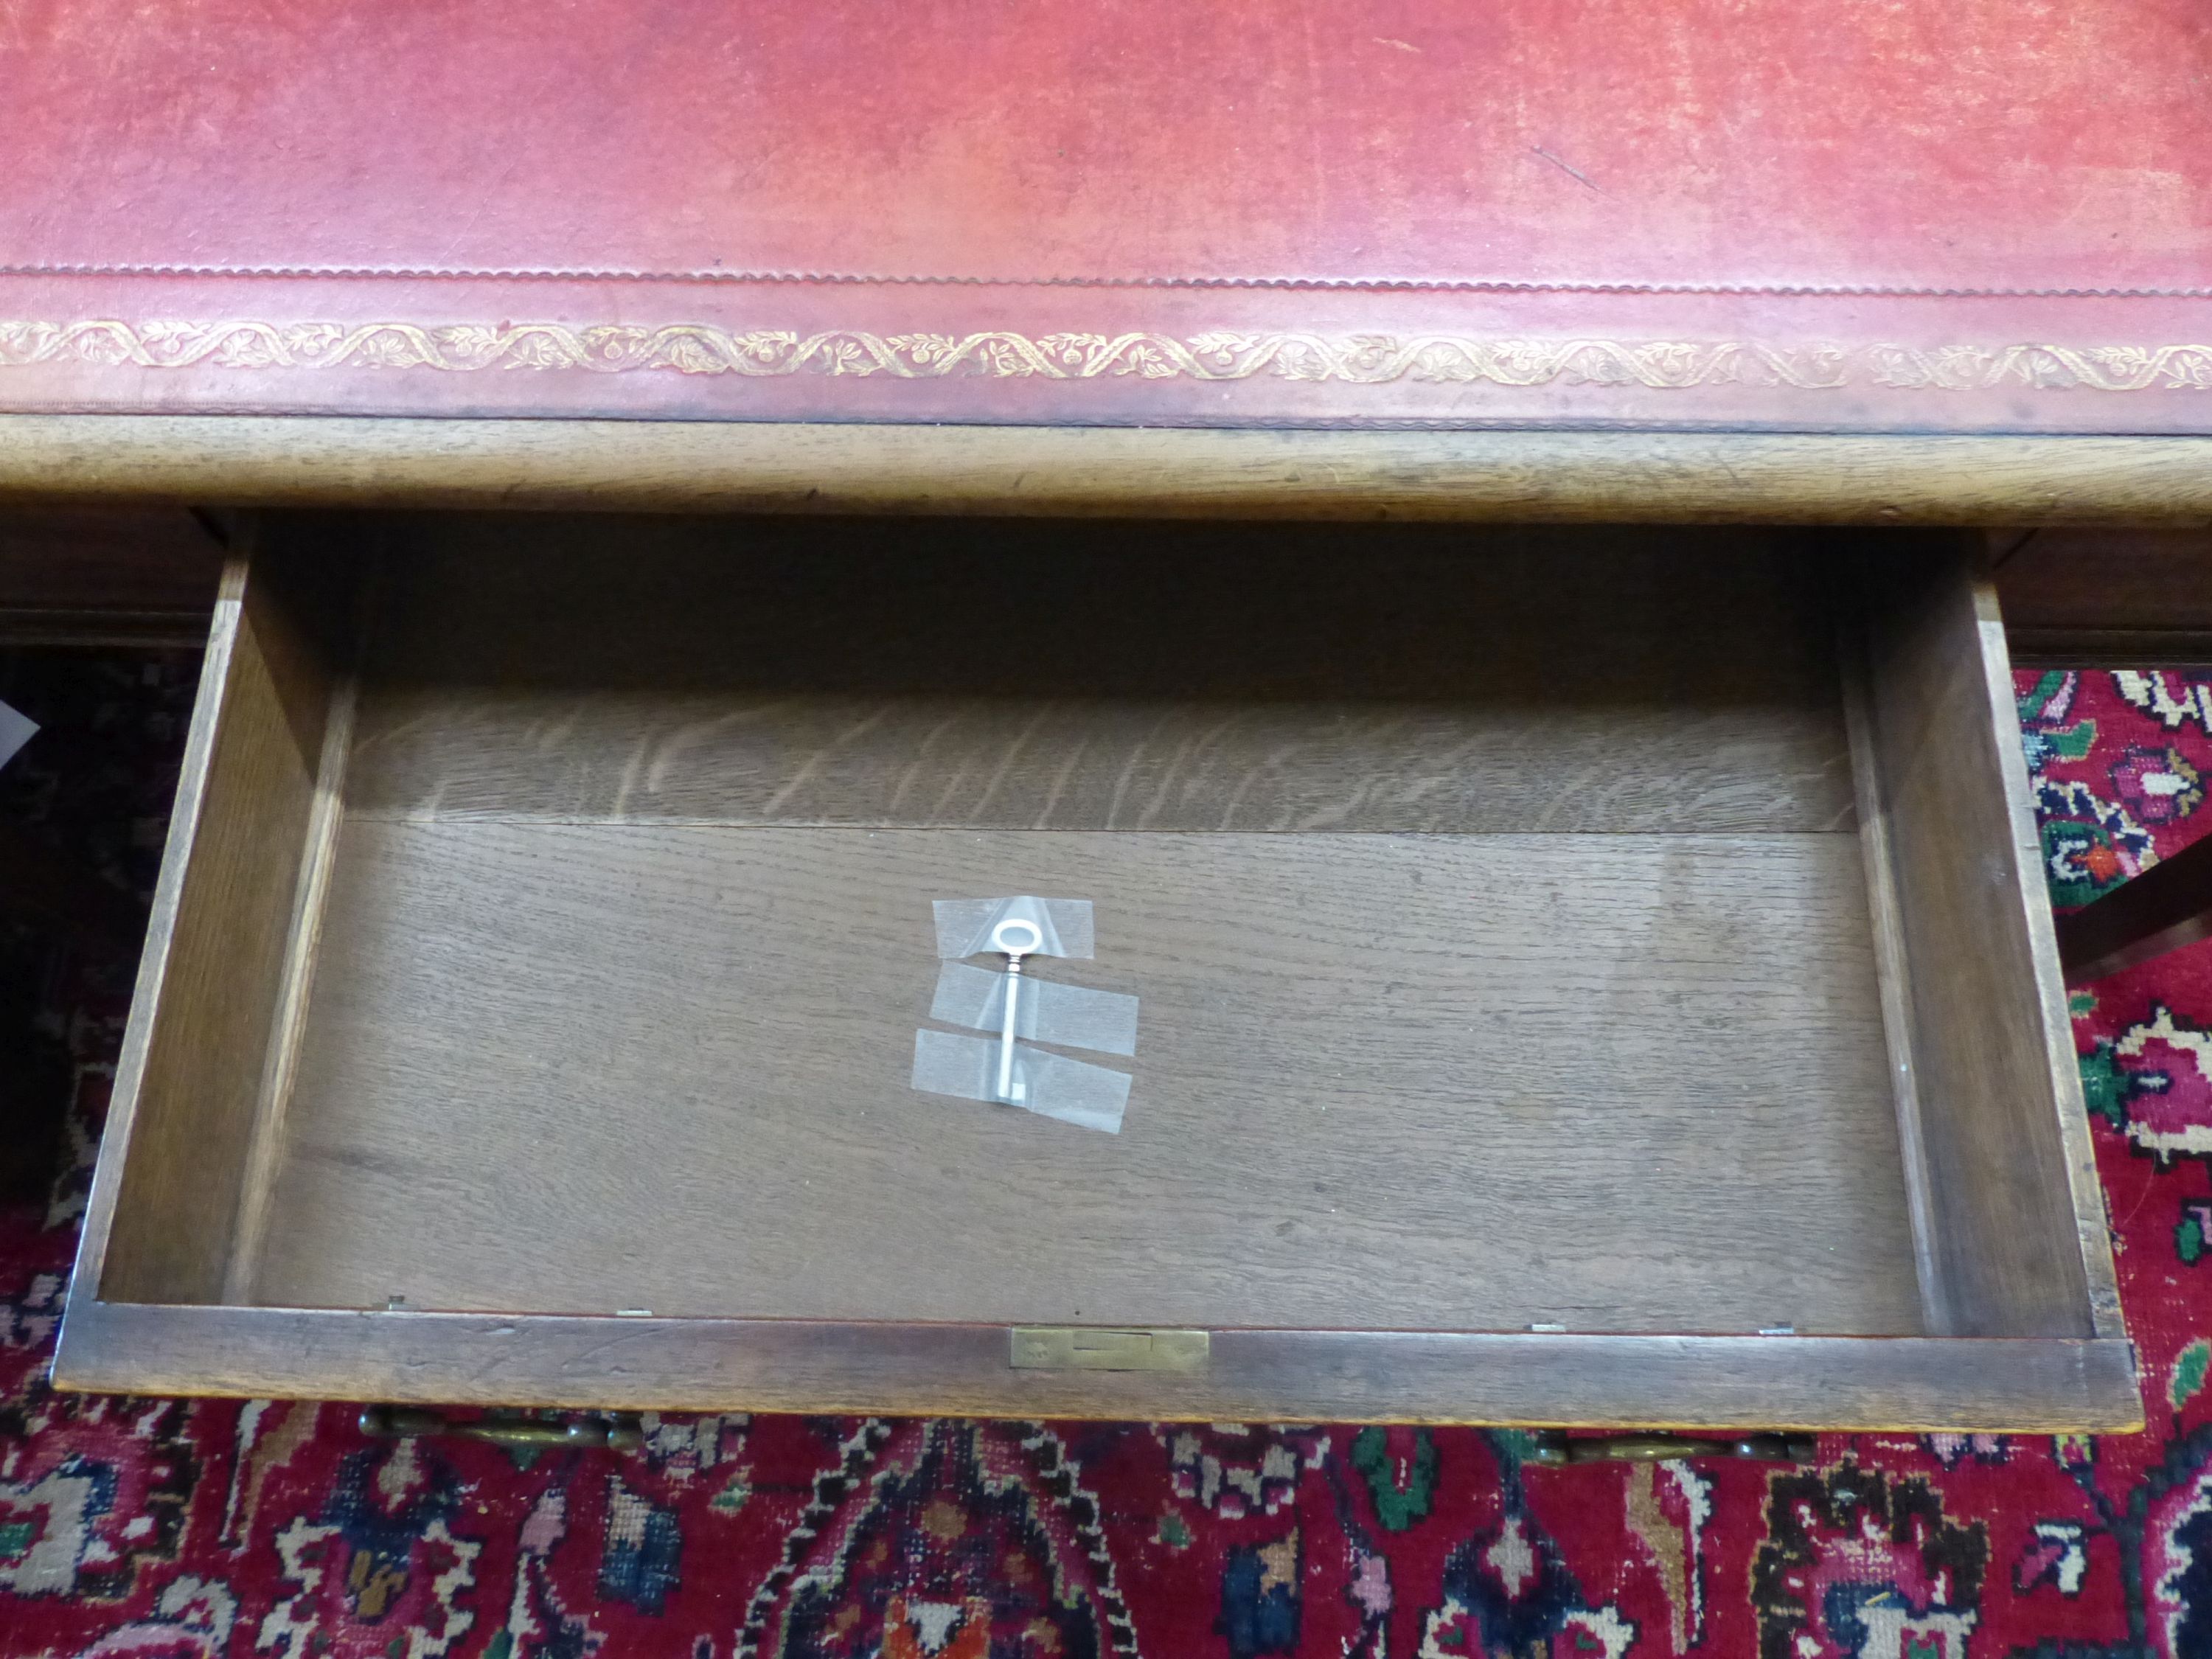 A George III style rectangular mahogany writing table, width 136cm, depth 91cm, height 75cm